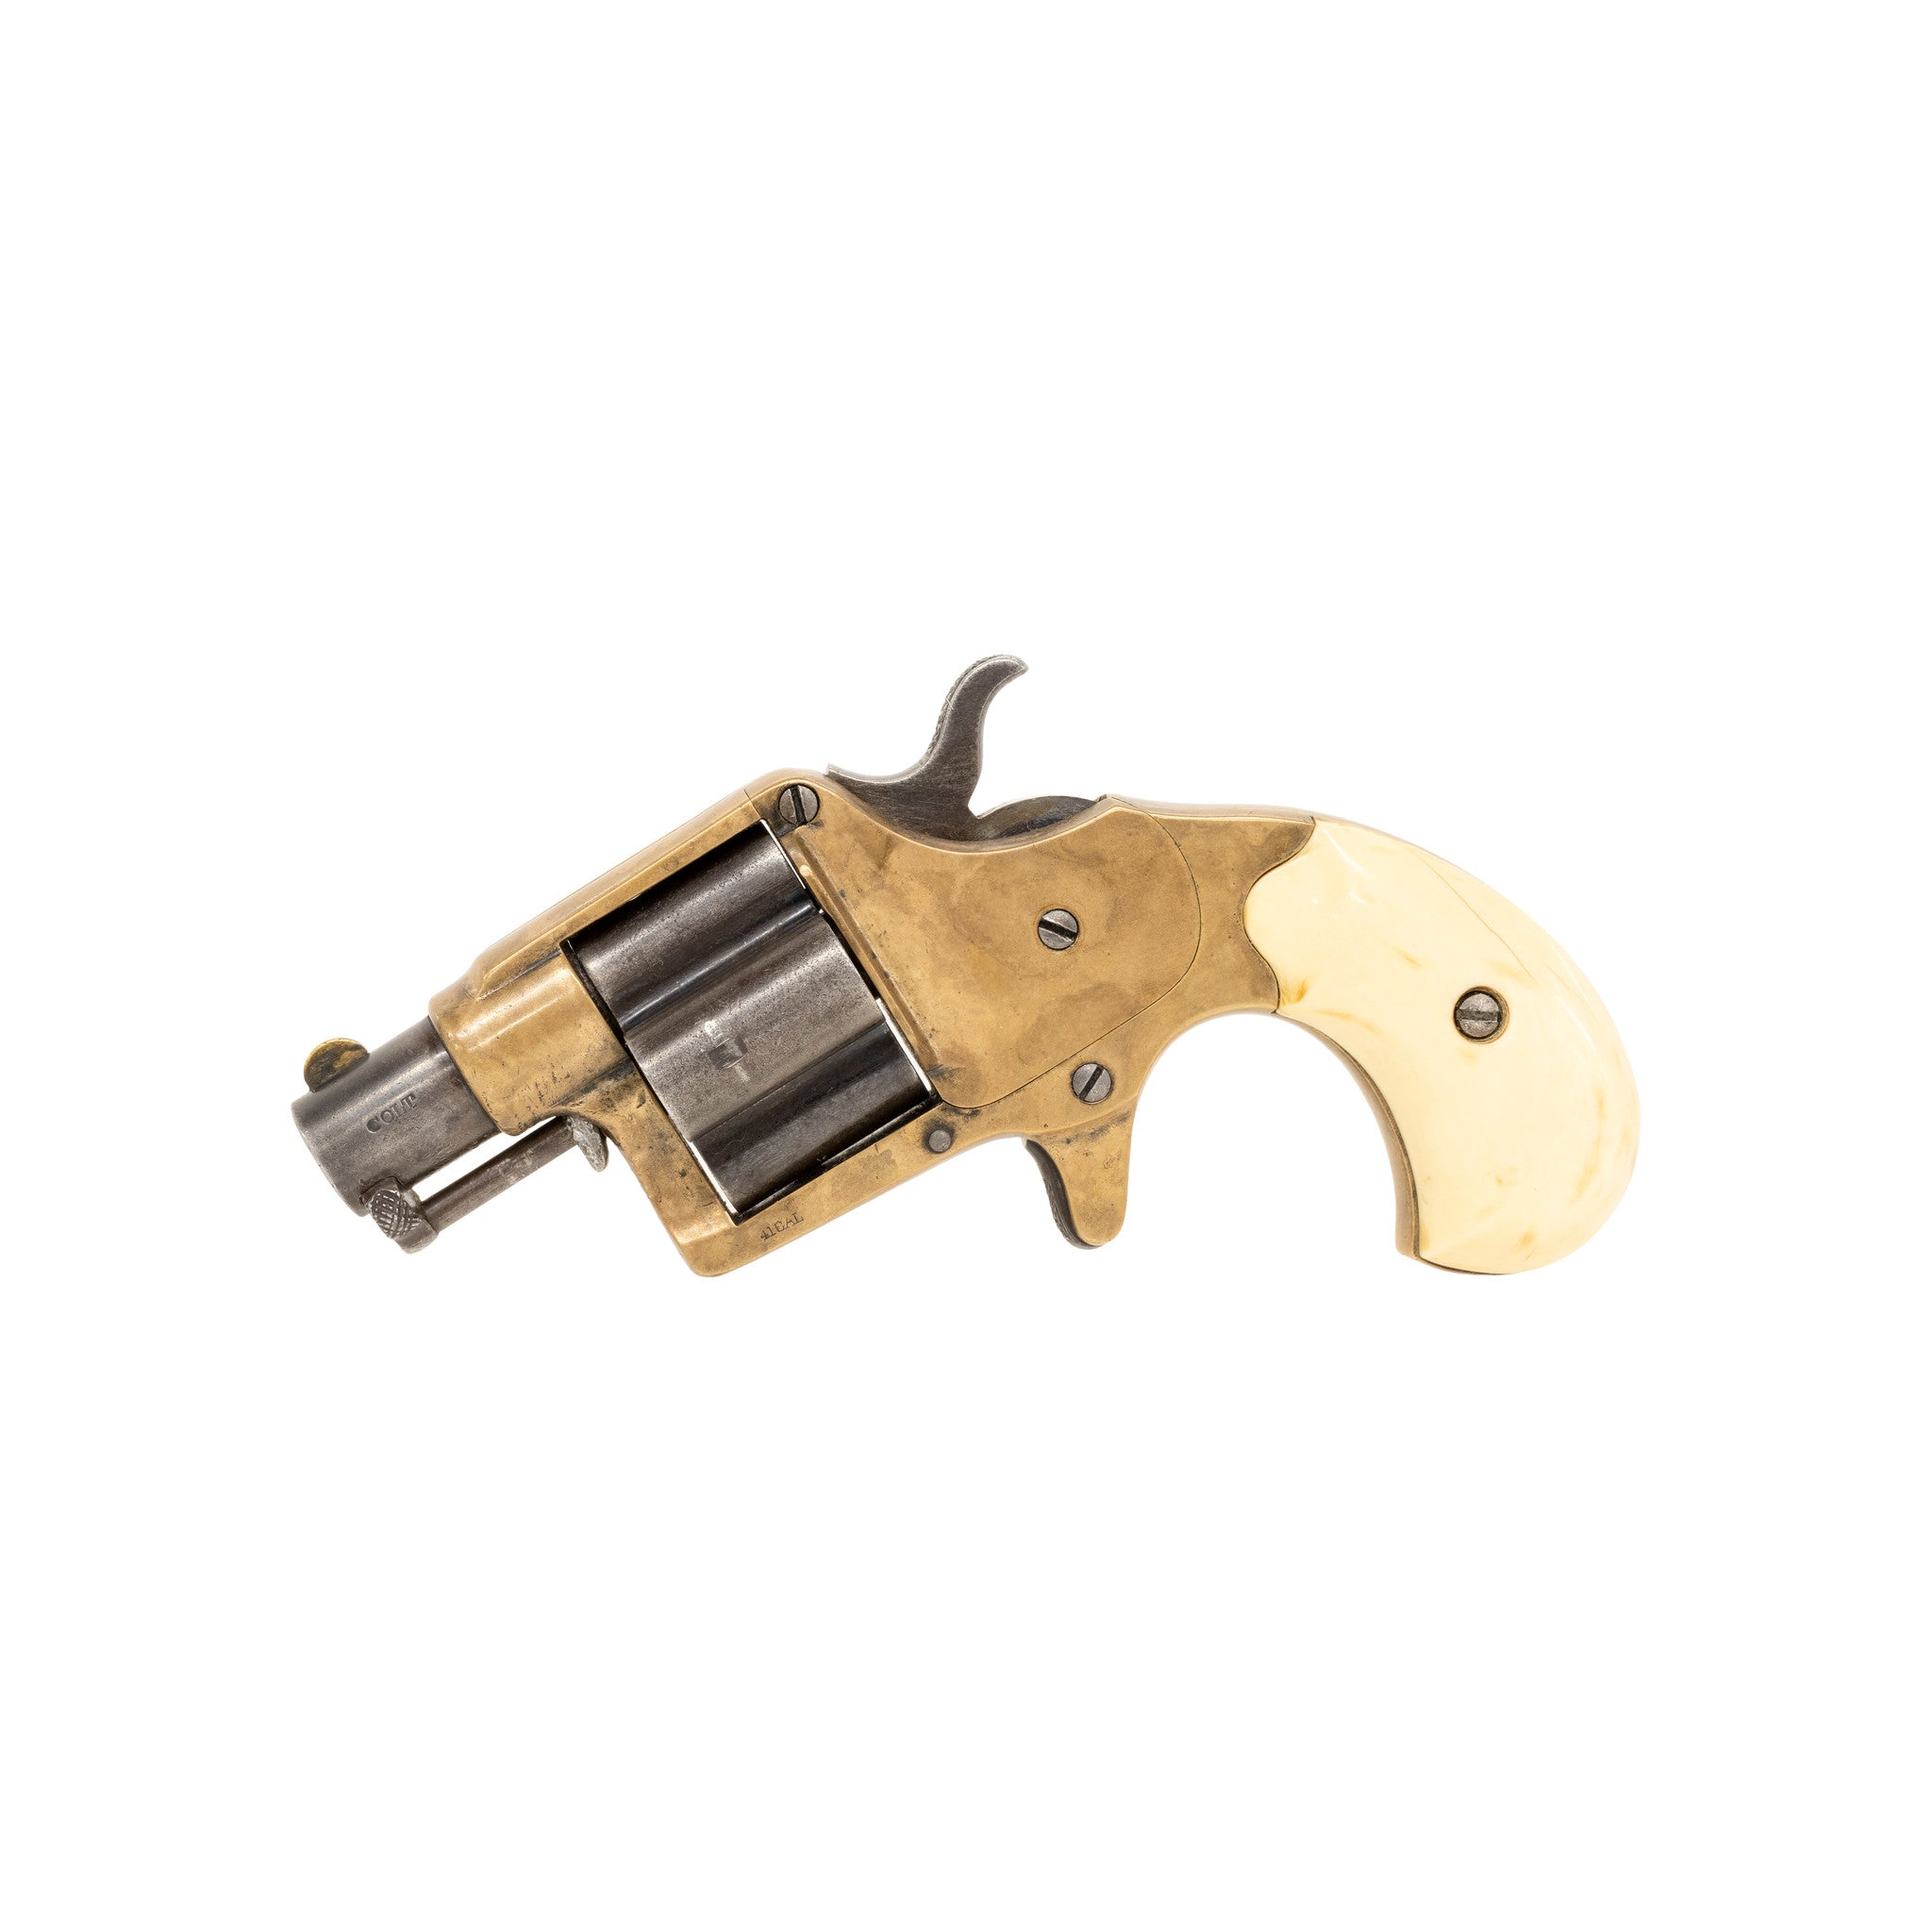 Short Barrel Colt Cloverleaf Revolver